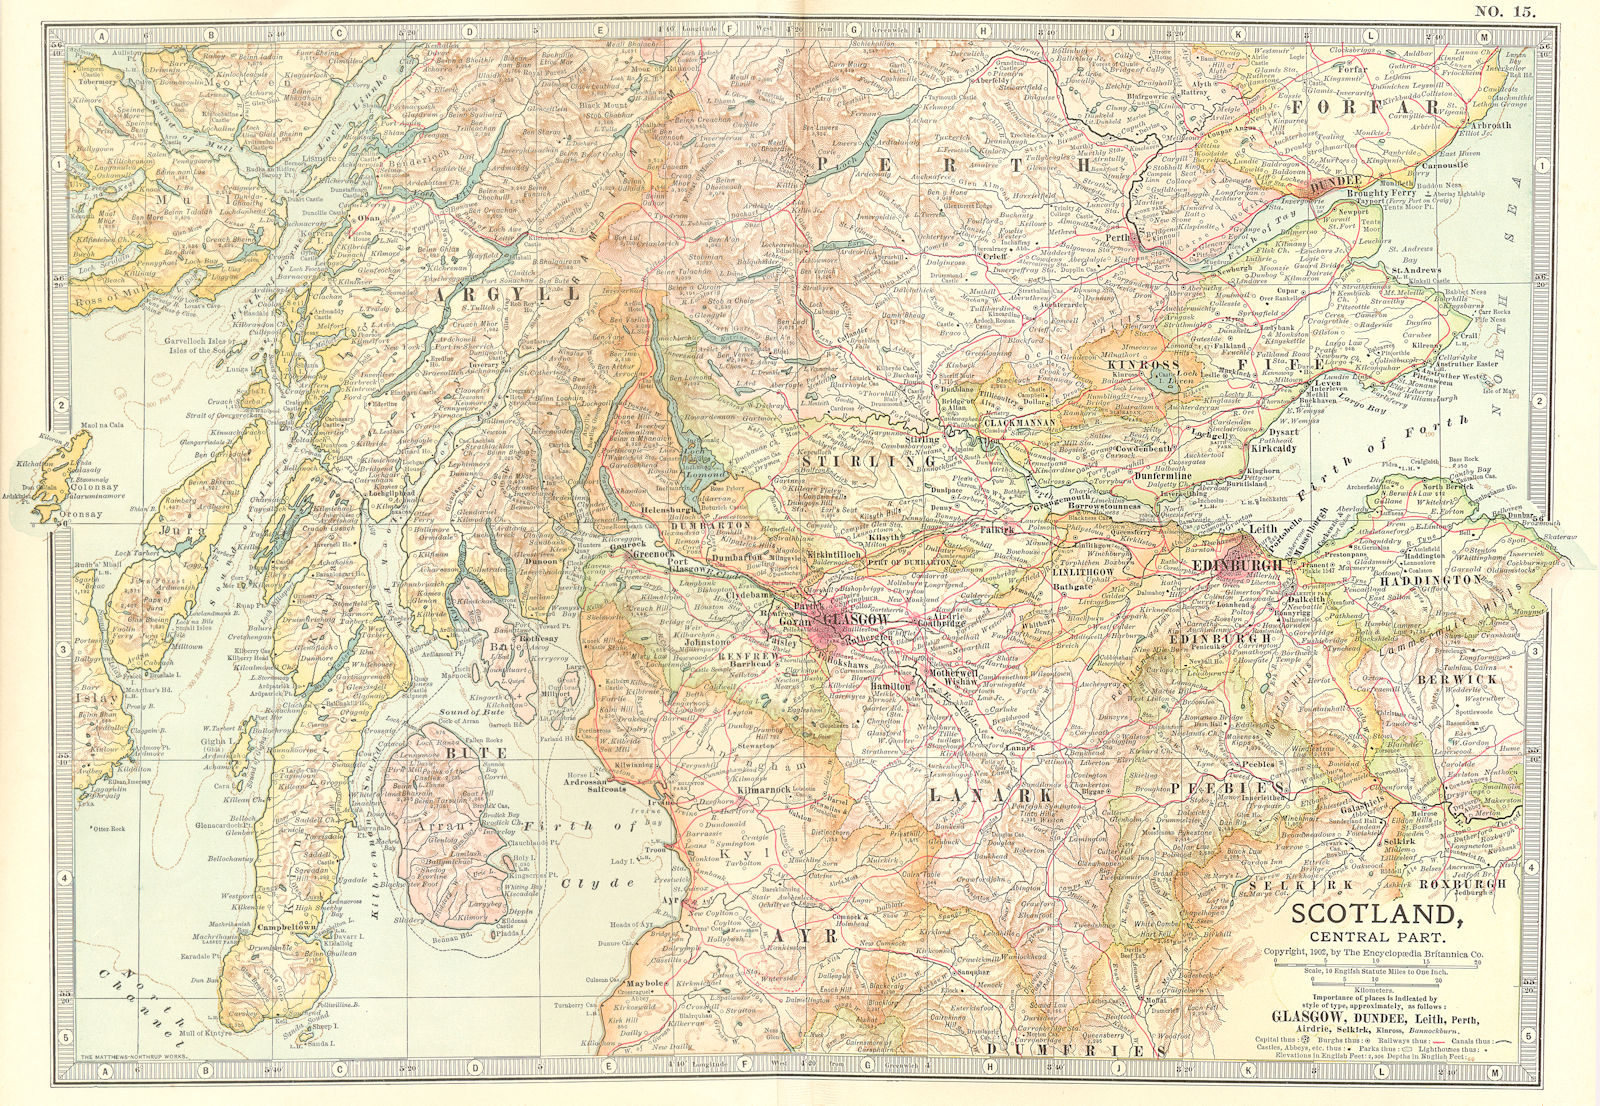 SCOTLAND CENTRAL. Lanark Peebles Stirling Perth Argyll Ayr Fife 1903 old map